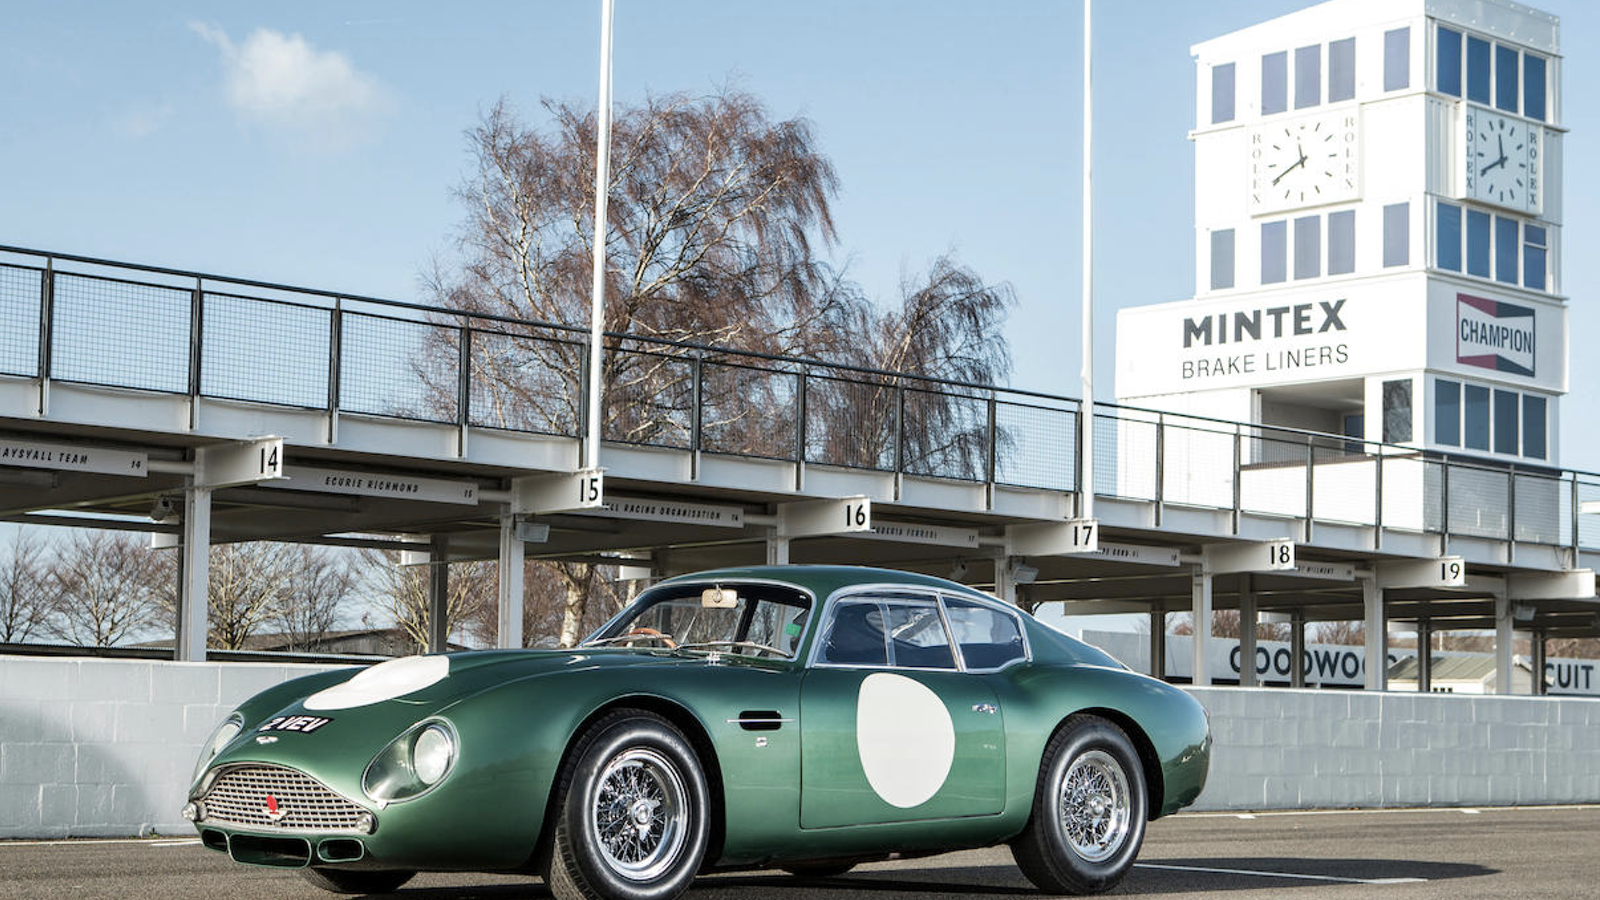 Super-rare £10m Aston Martin leads Goodwood auction